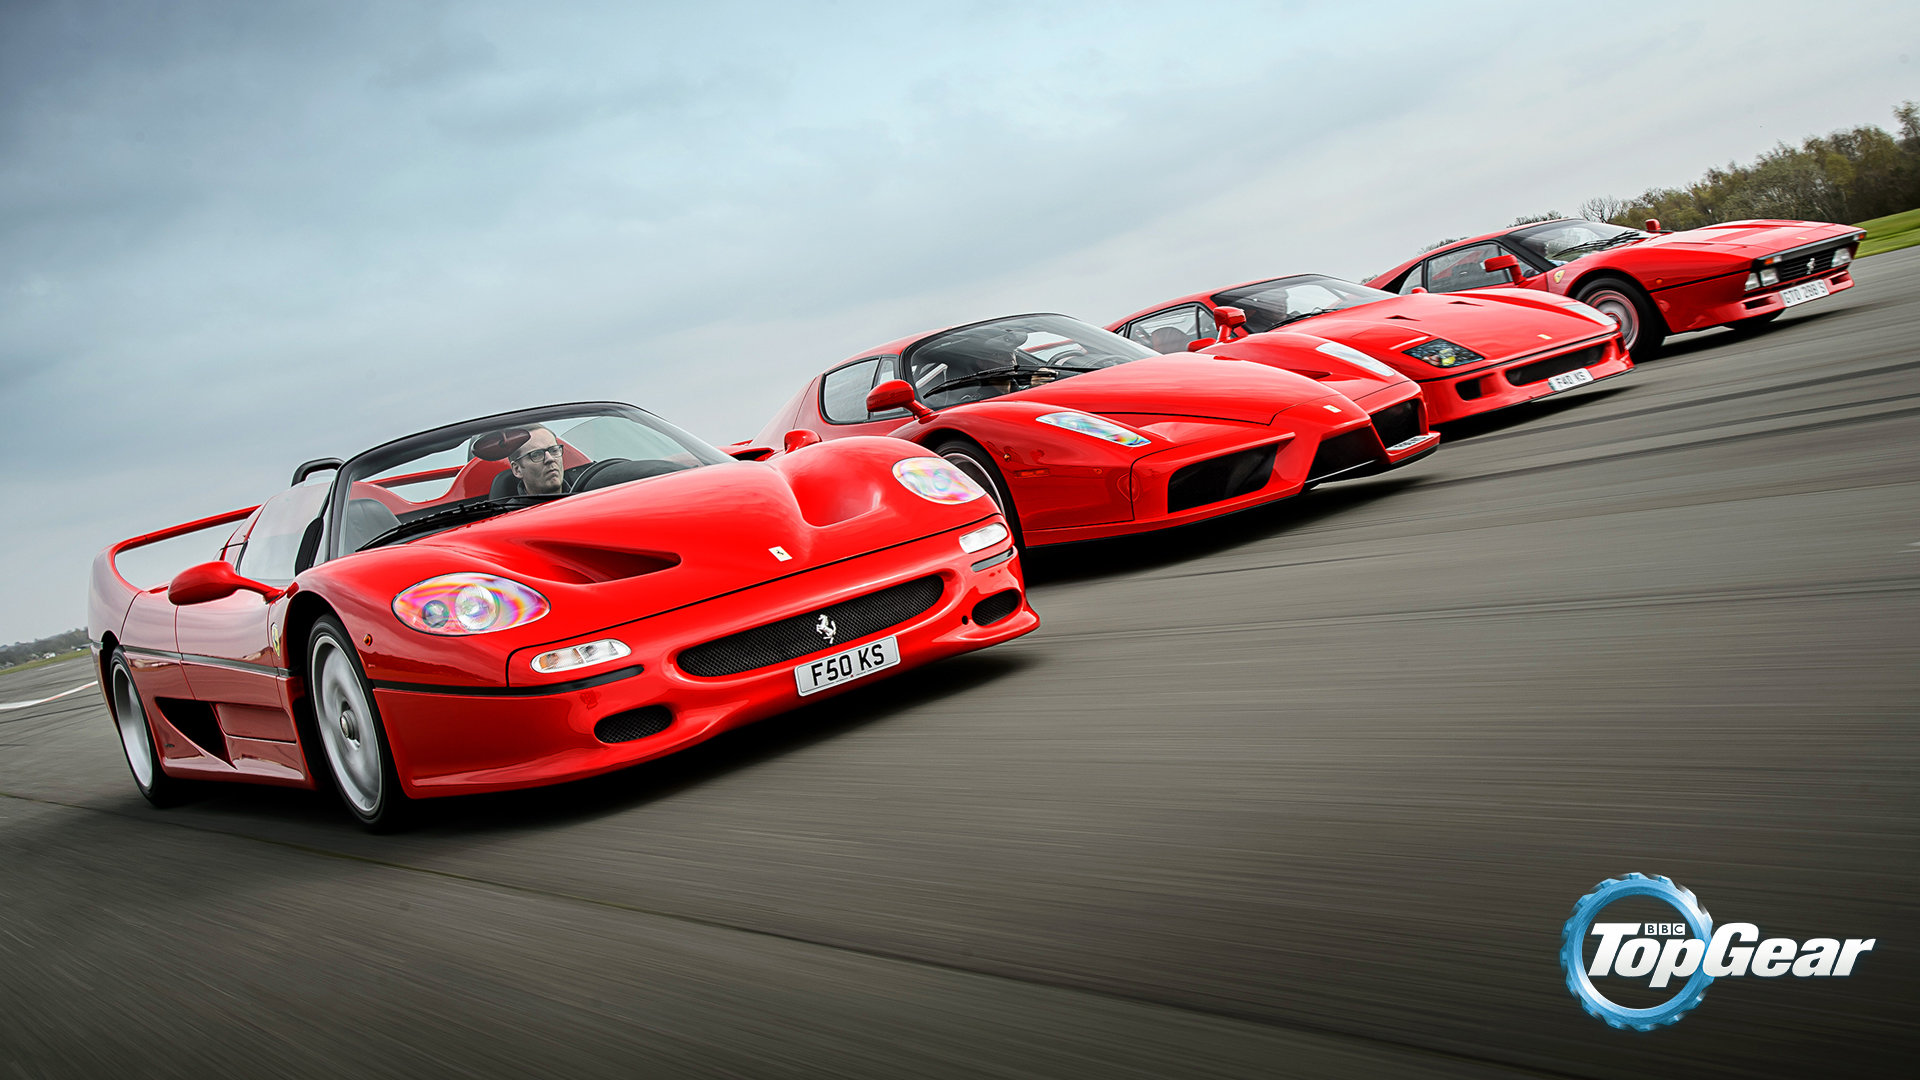 Ferrari F50 Wallpapers Hd For Desktop Backgrounds